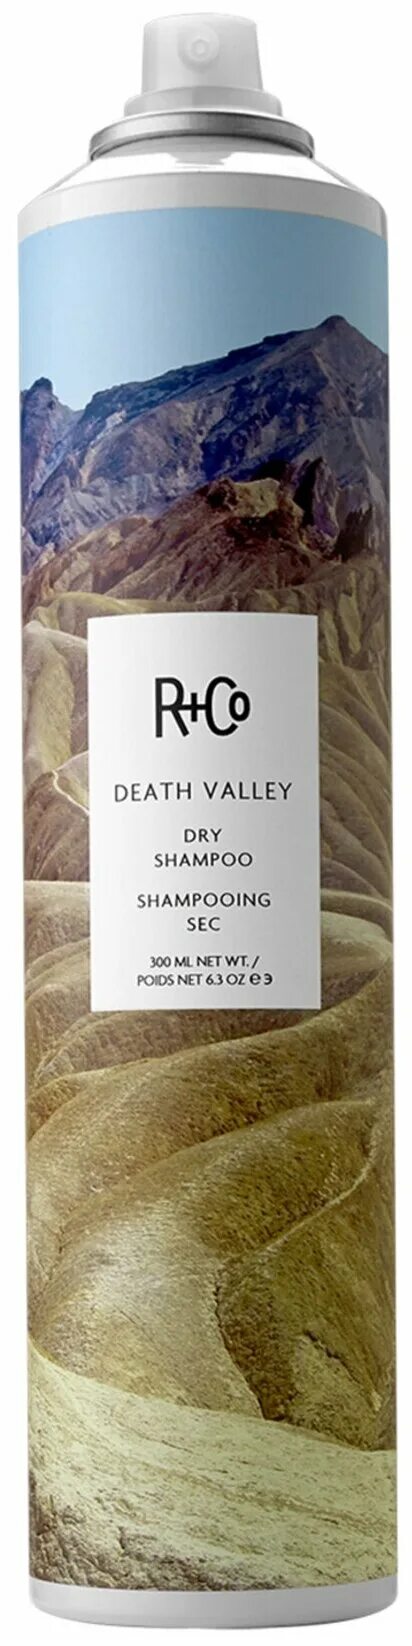 Сухой шампунь r co. Death Valley Dry Shampoo;. R+co Death Valley Dry Shampoo. R+co Death Valley сухой шампунь. Сухой шампунь r+co спрей.